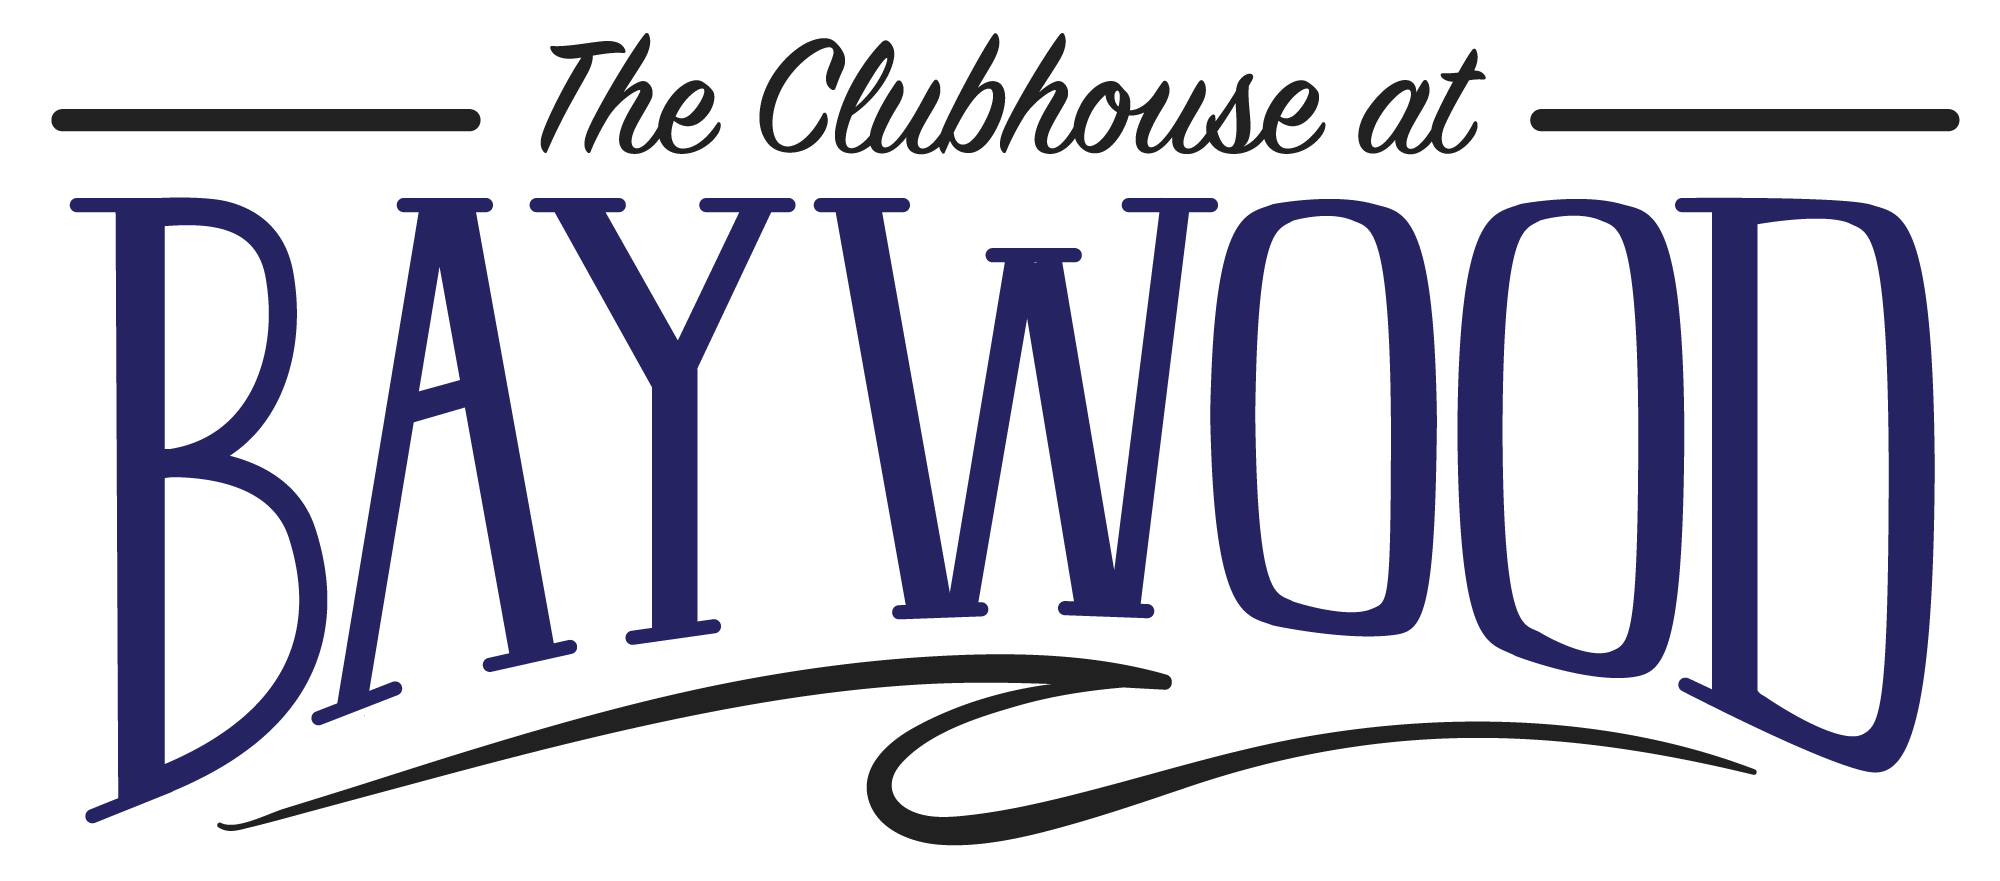 baywood clubhouse logo final